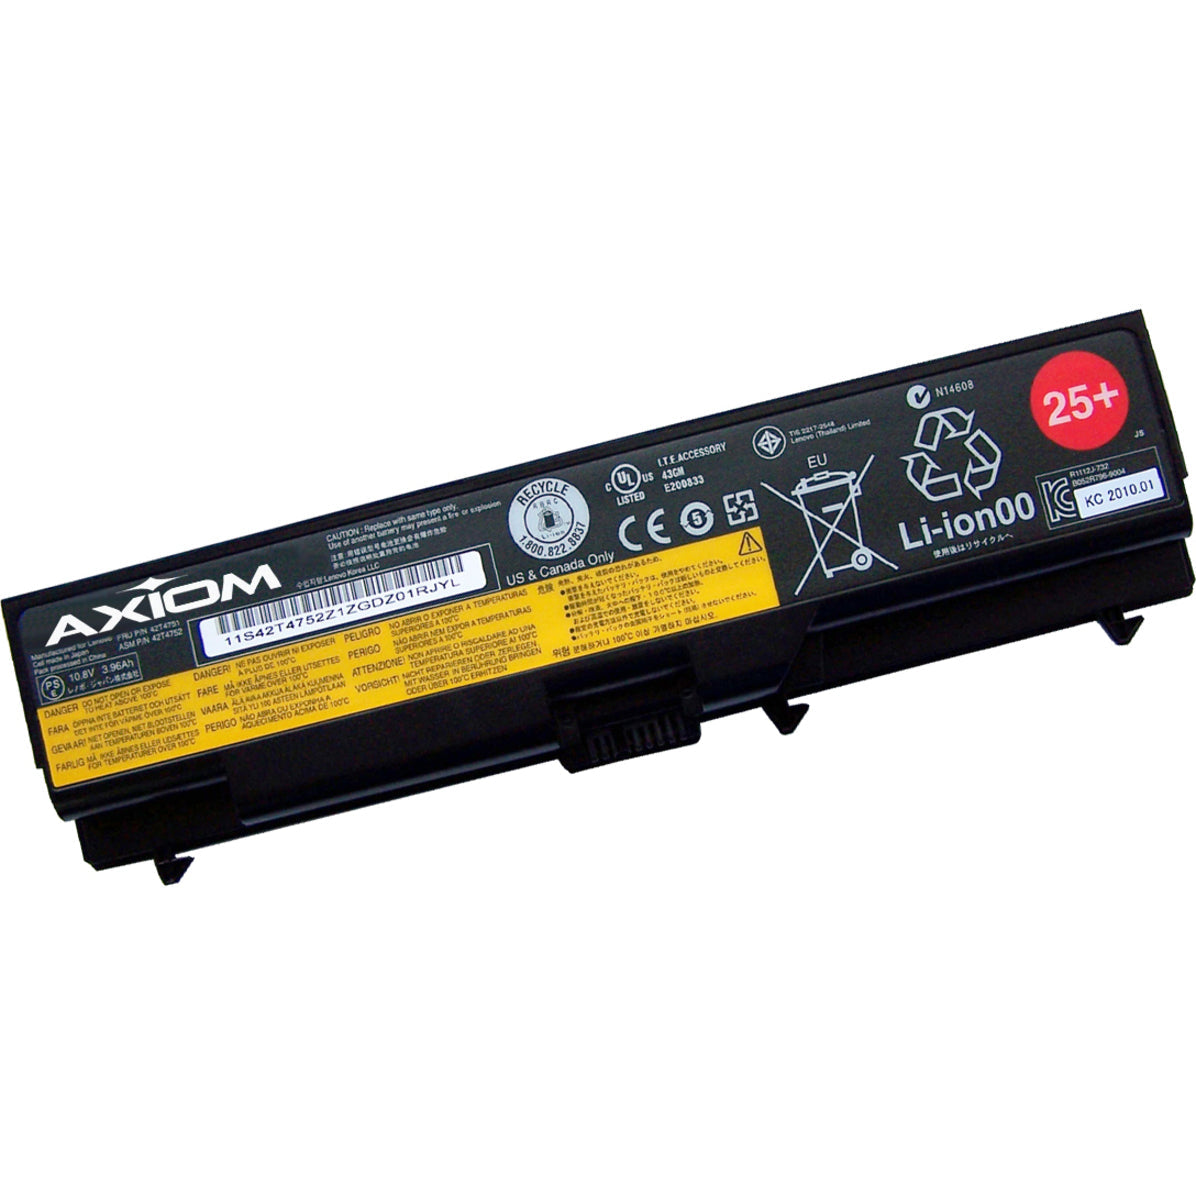 Axiom LI-ION 6-Cell Battery for Lenovo - 51J0499 42T4702